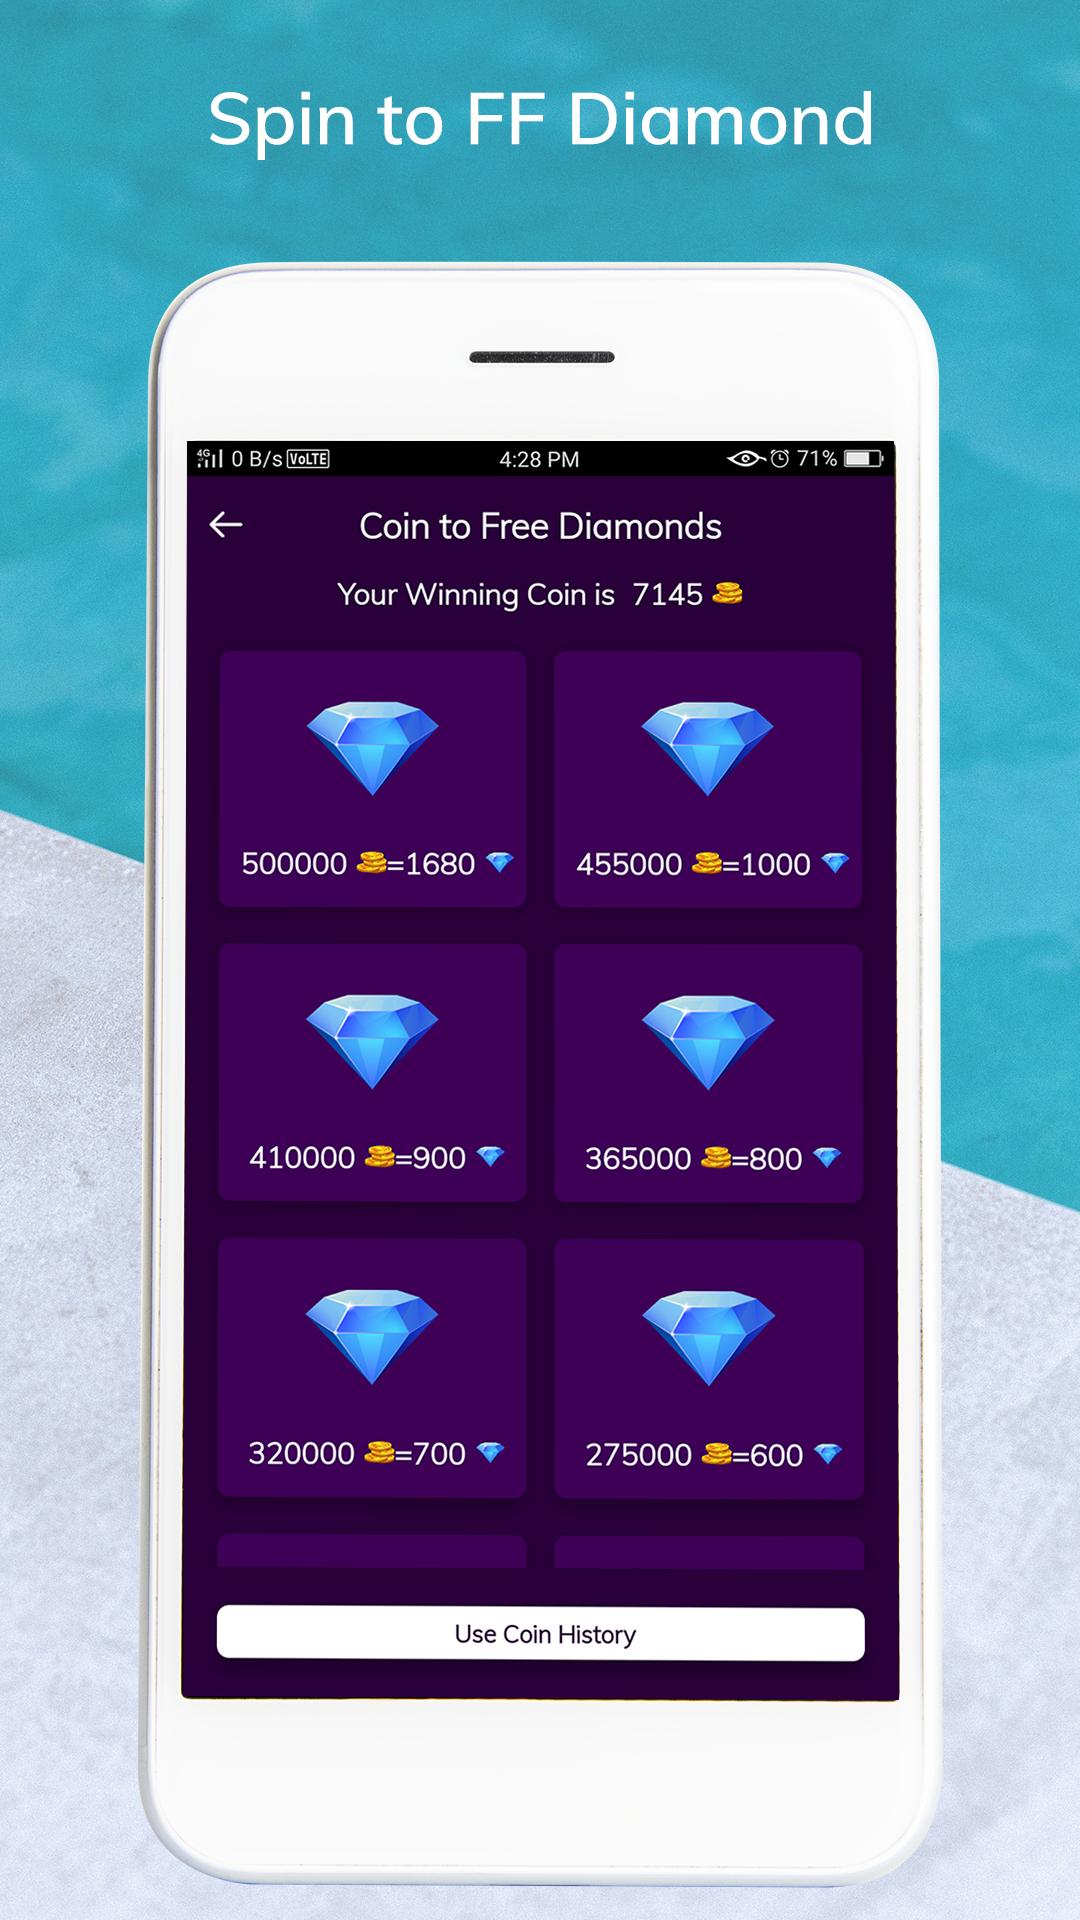 Lucky Spin to FF Diamond - Win Free Diamond 1.9 Screenshot 5